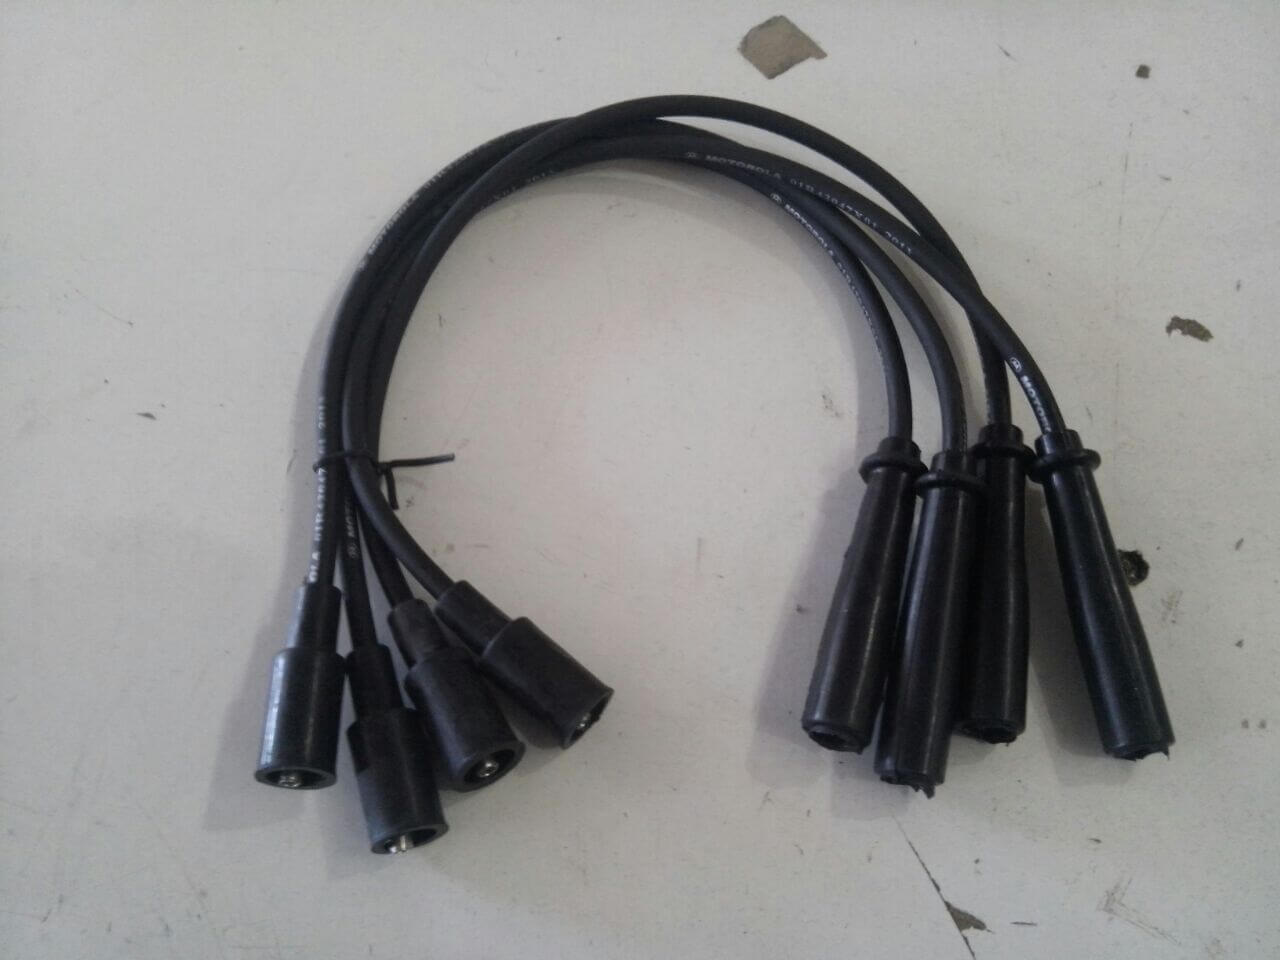 Hafei Minyi Kit Cables jgo Cables Ruiyi Zhongy 